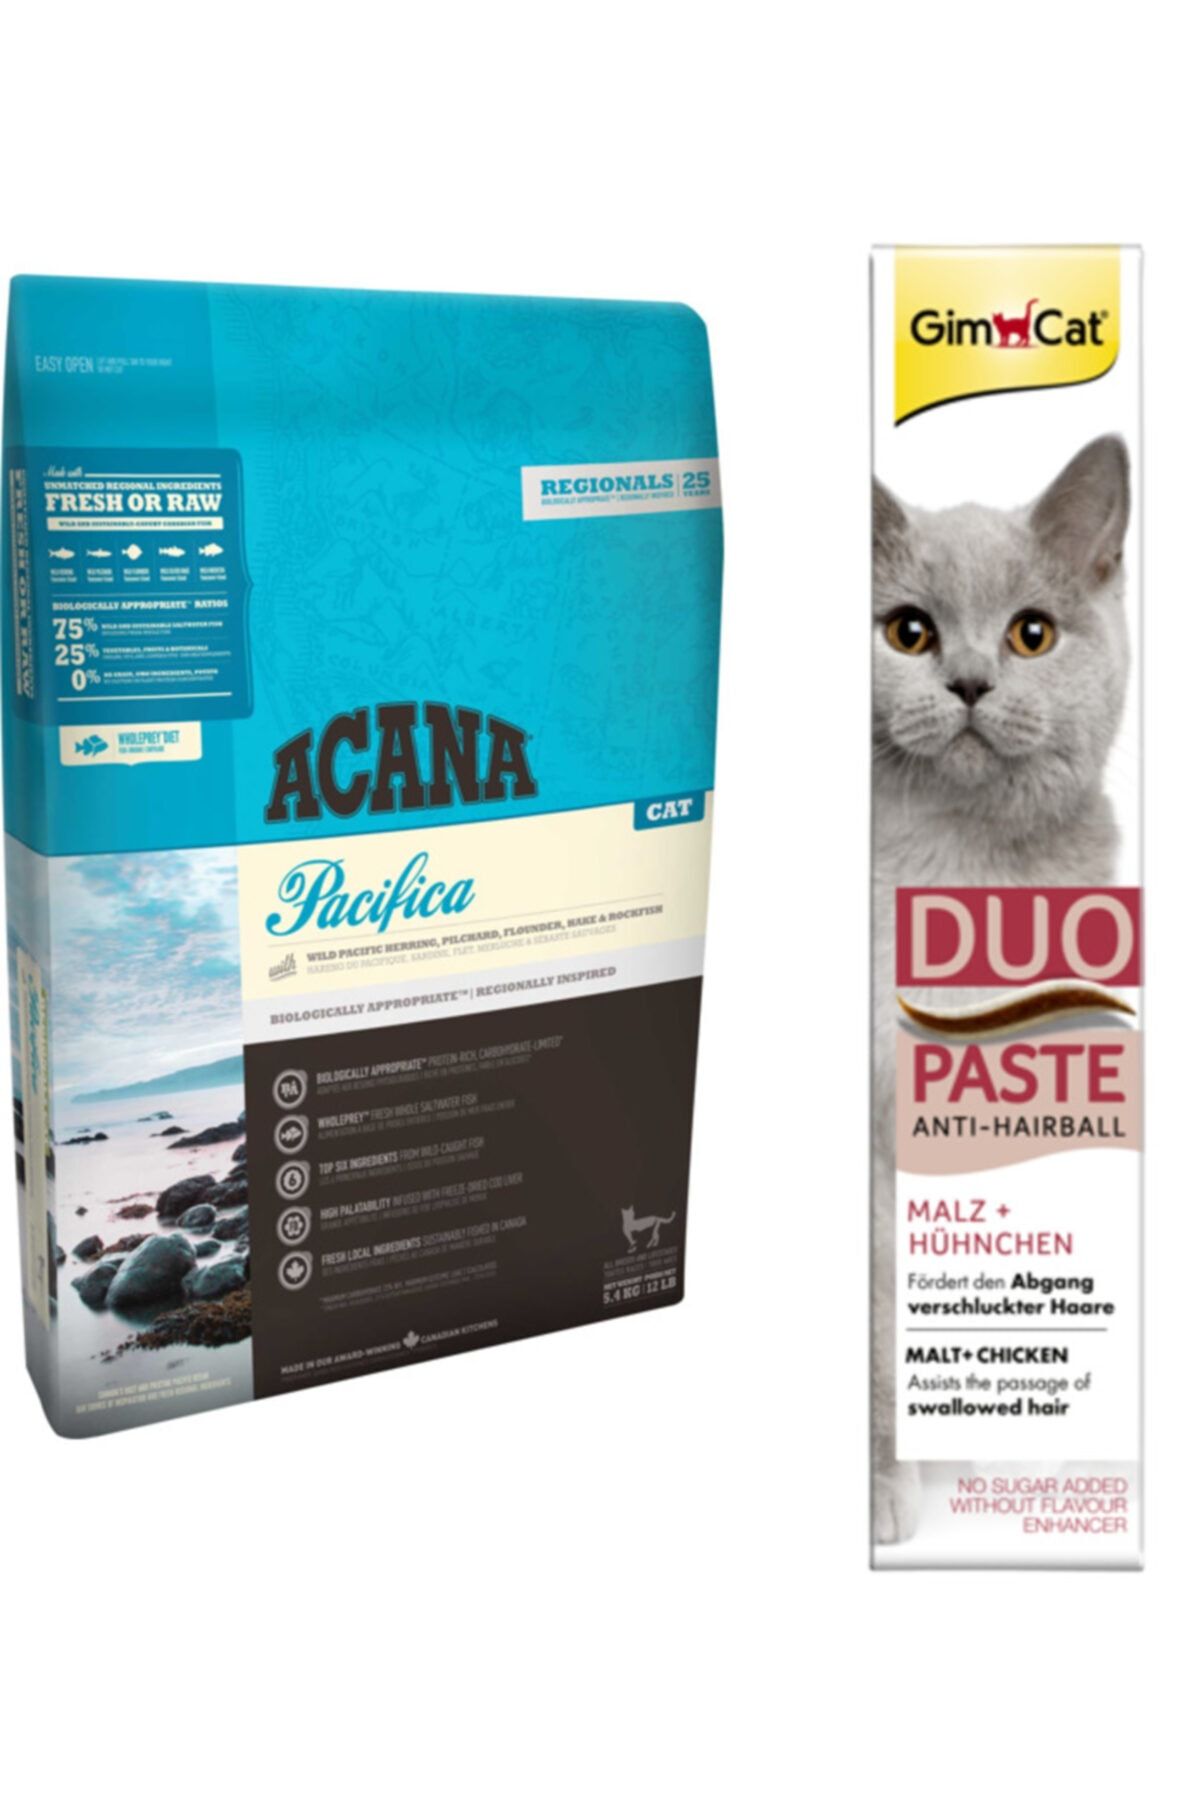 Acana Pacifica Kedi Maması 1,8 Kg + Gimcat Duo Paste Peynirli Anti-hairball Malt 50gr